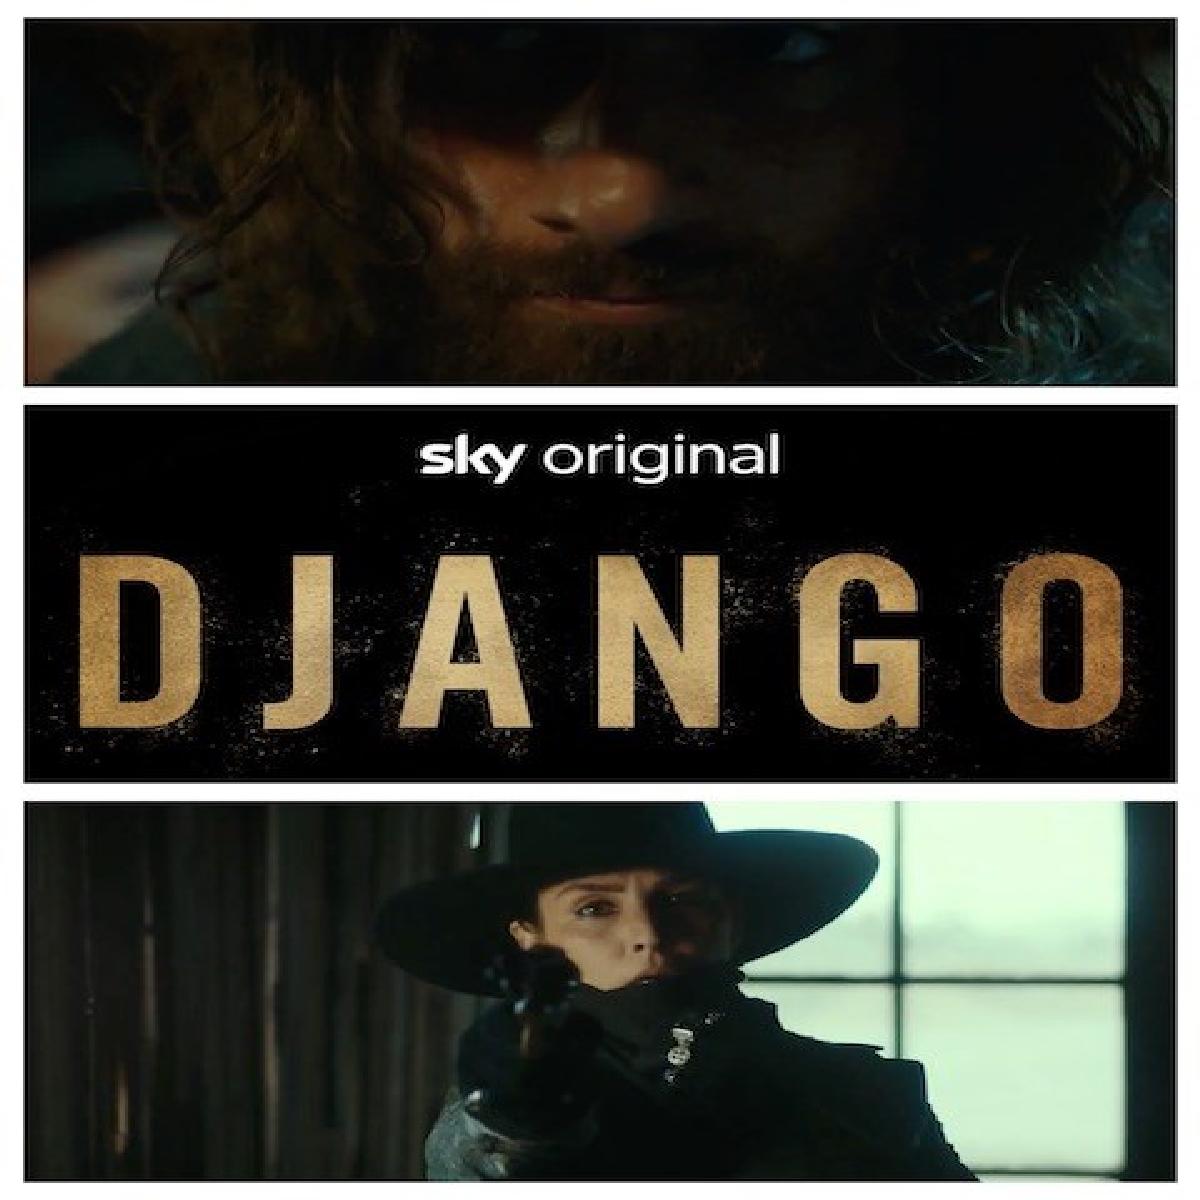 Django Series Teaser Is Out